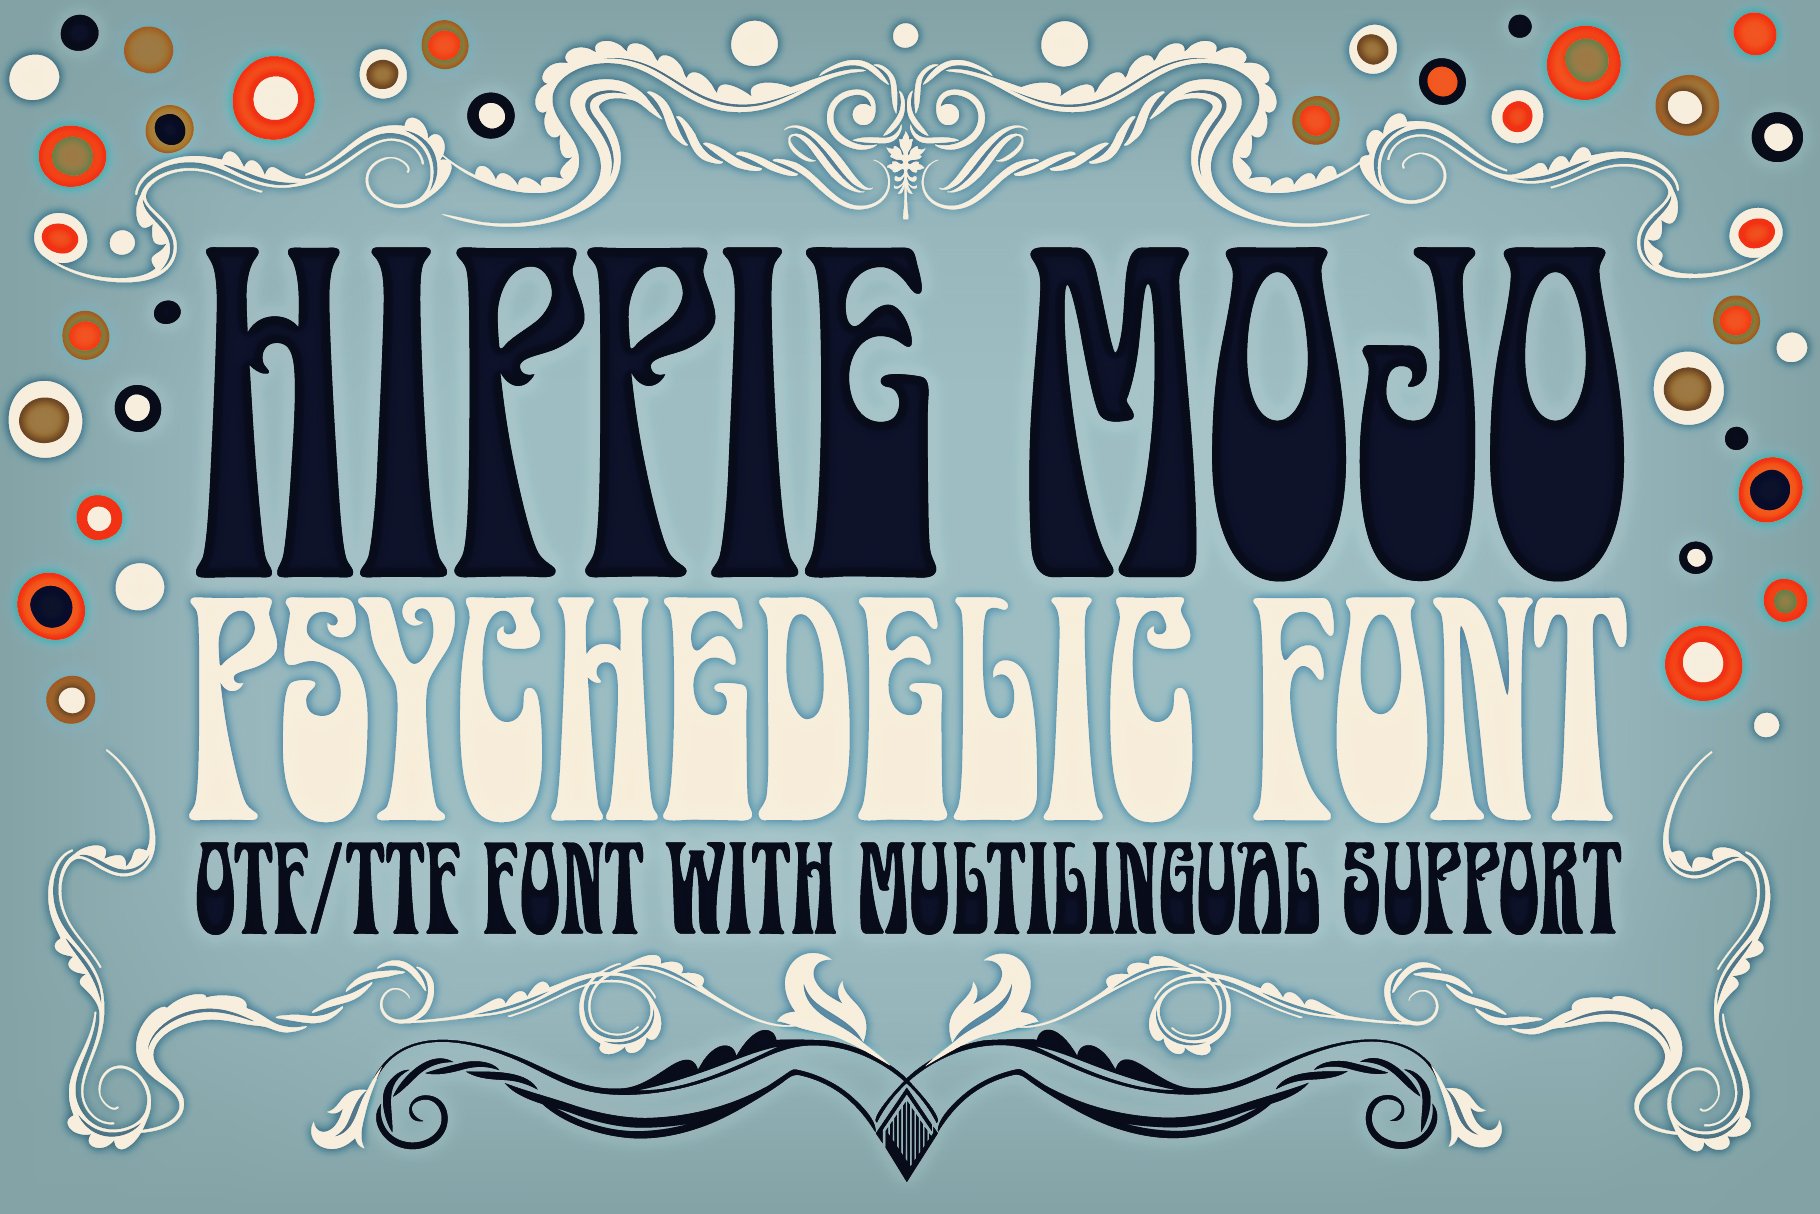 Hippie Mojo Font cover image.